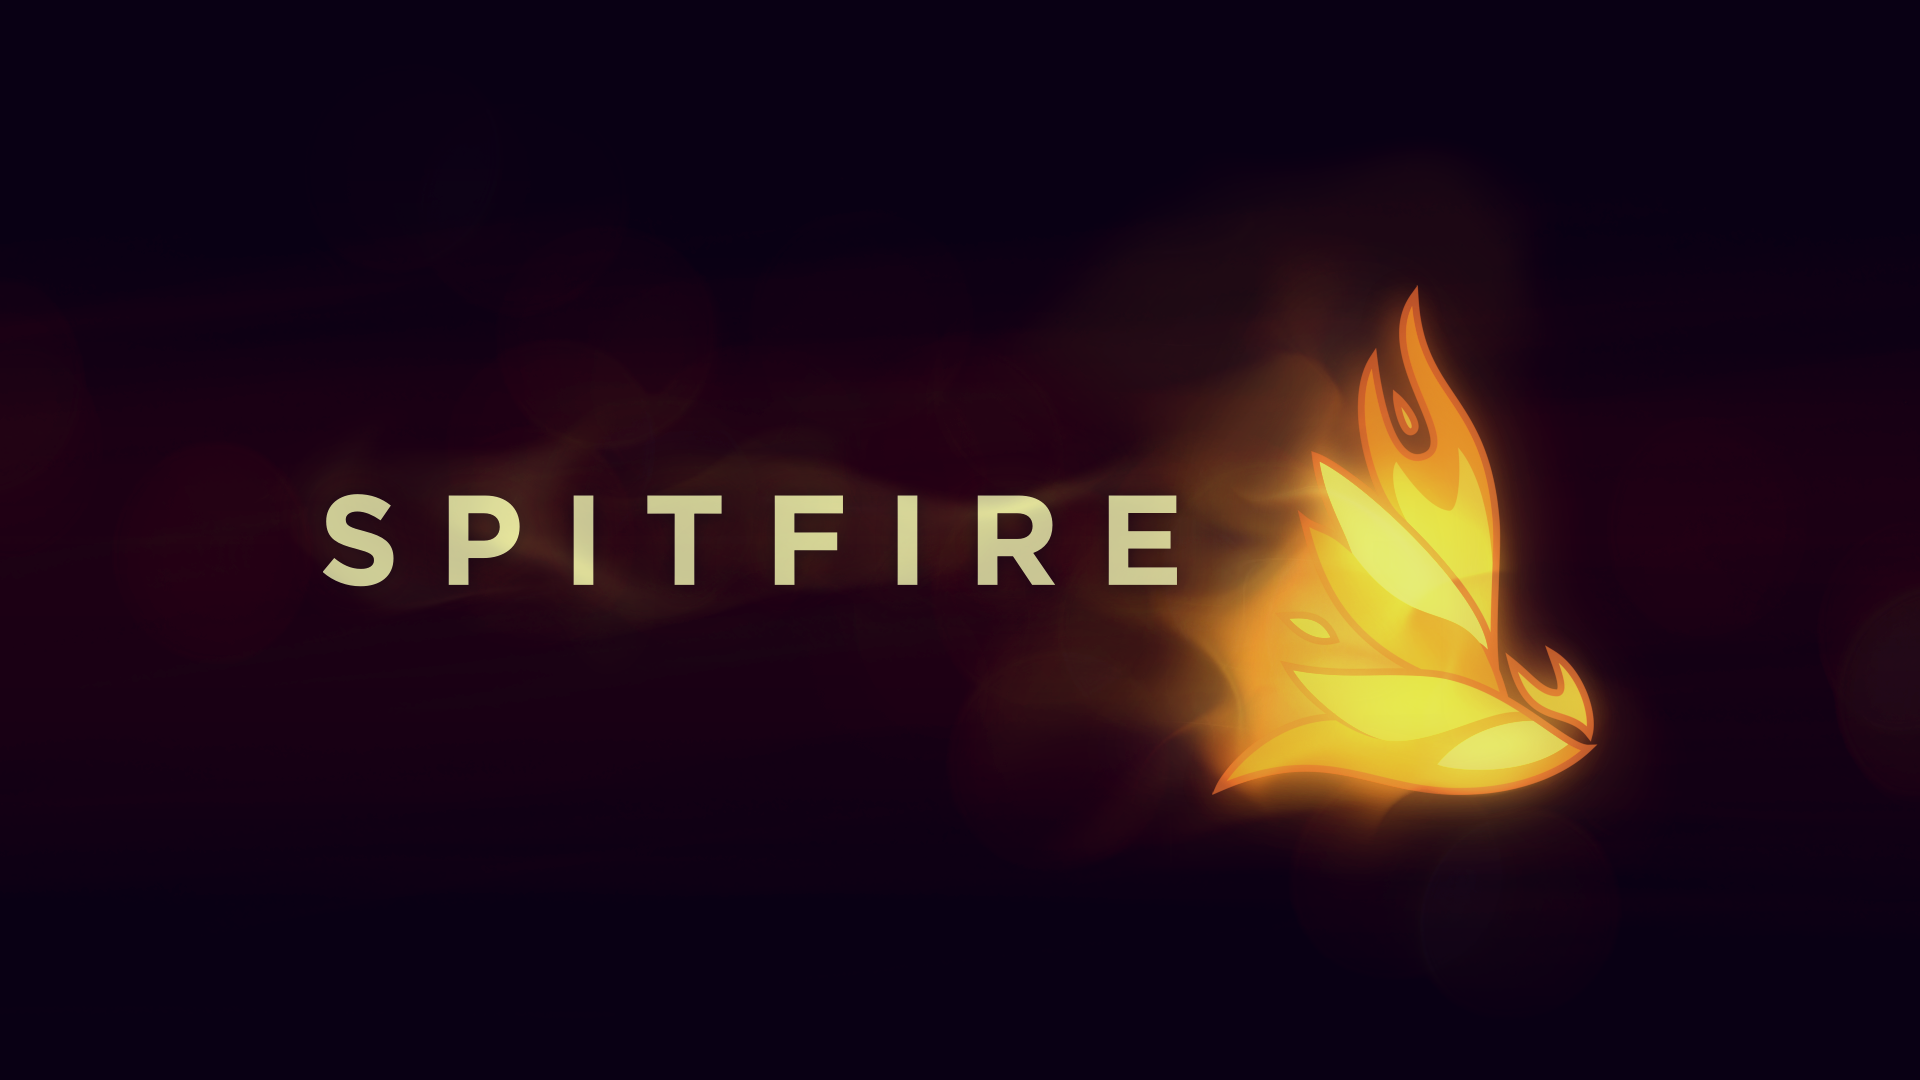 Spitfire by Fire-Love-Account, impala99, Pirill-Poveniy and Wolfariusorca